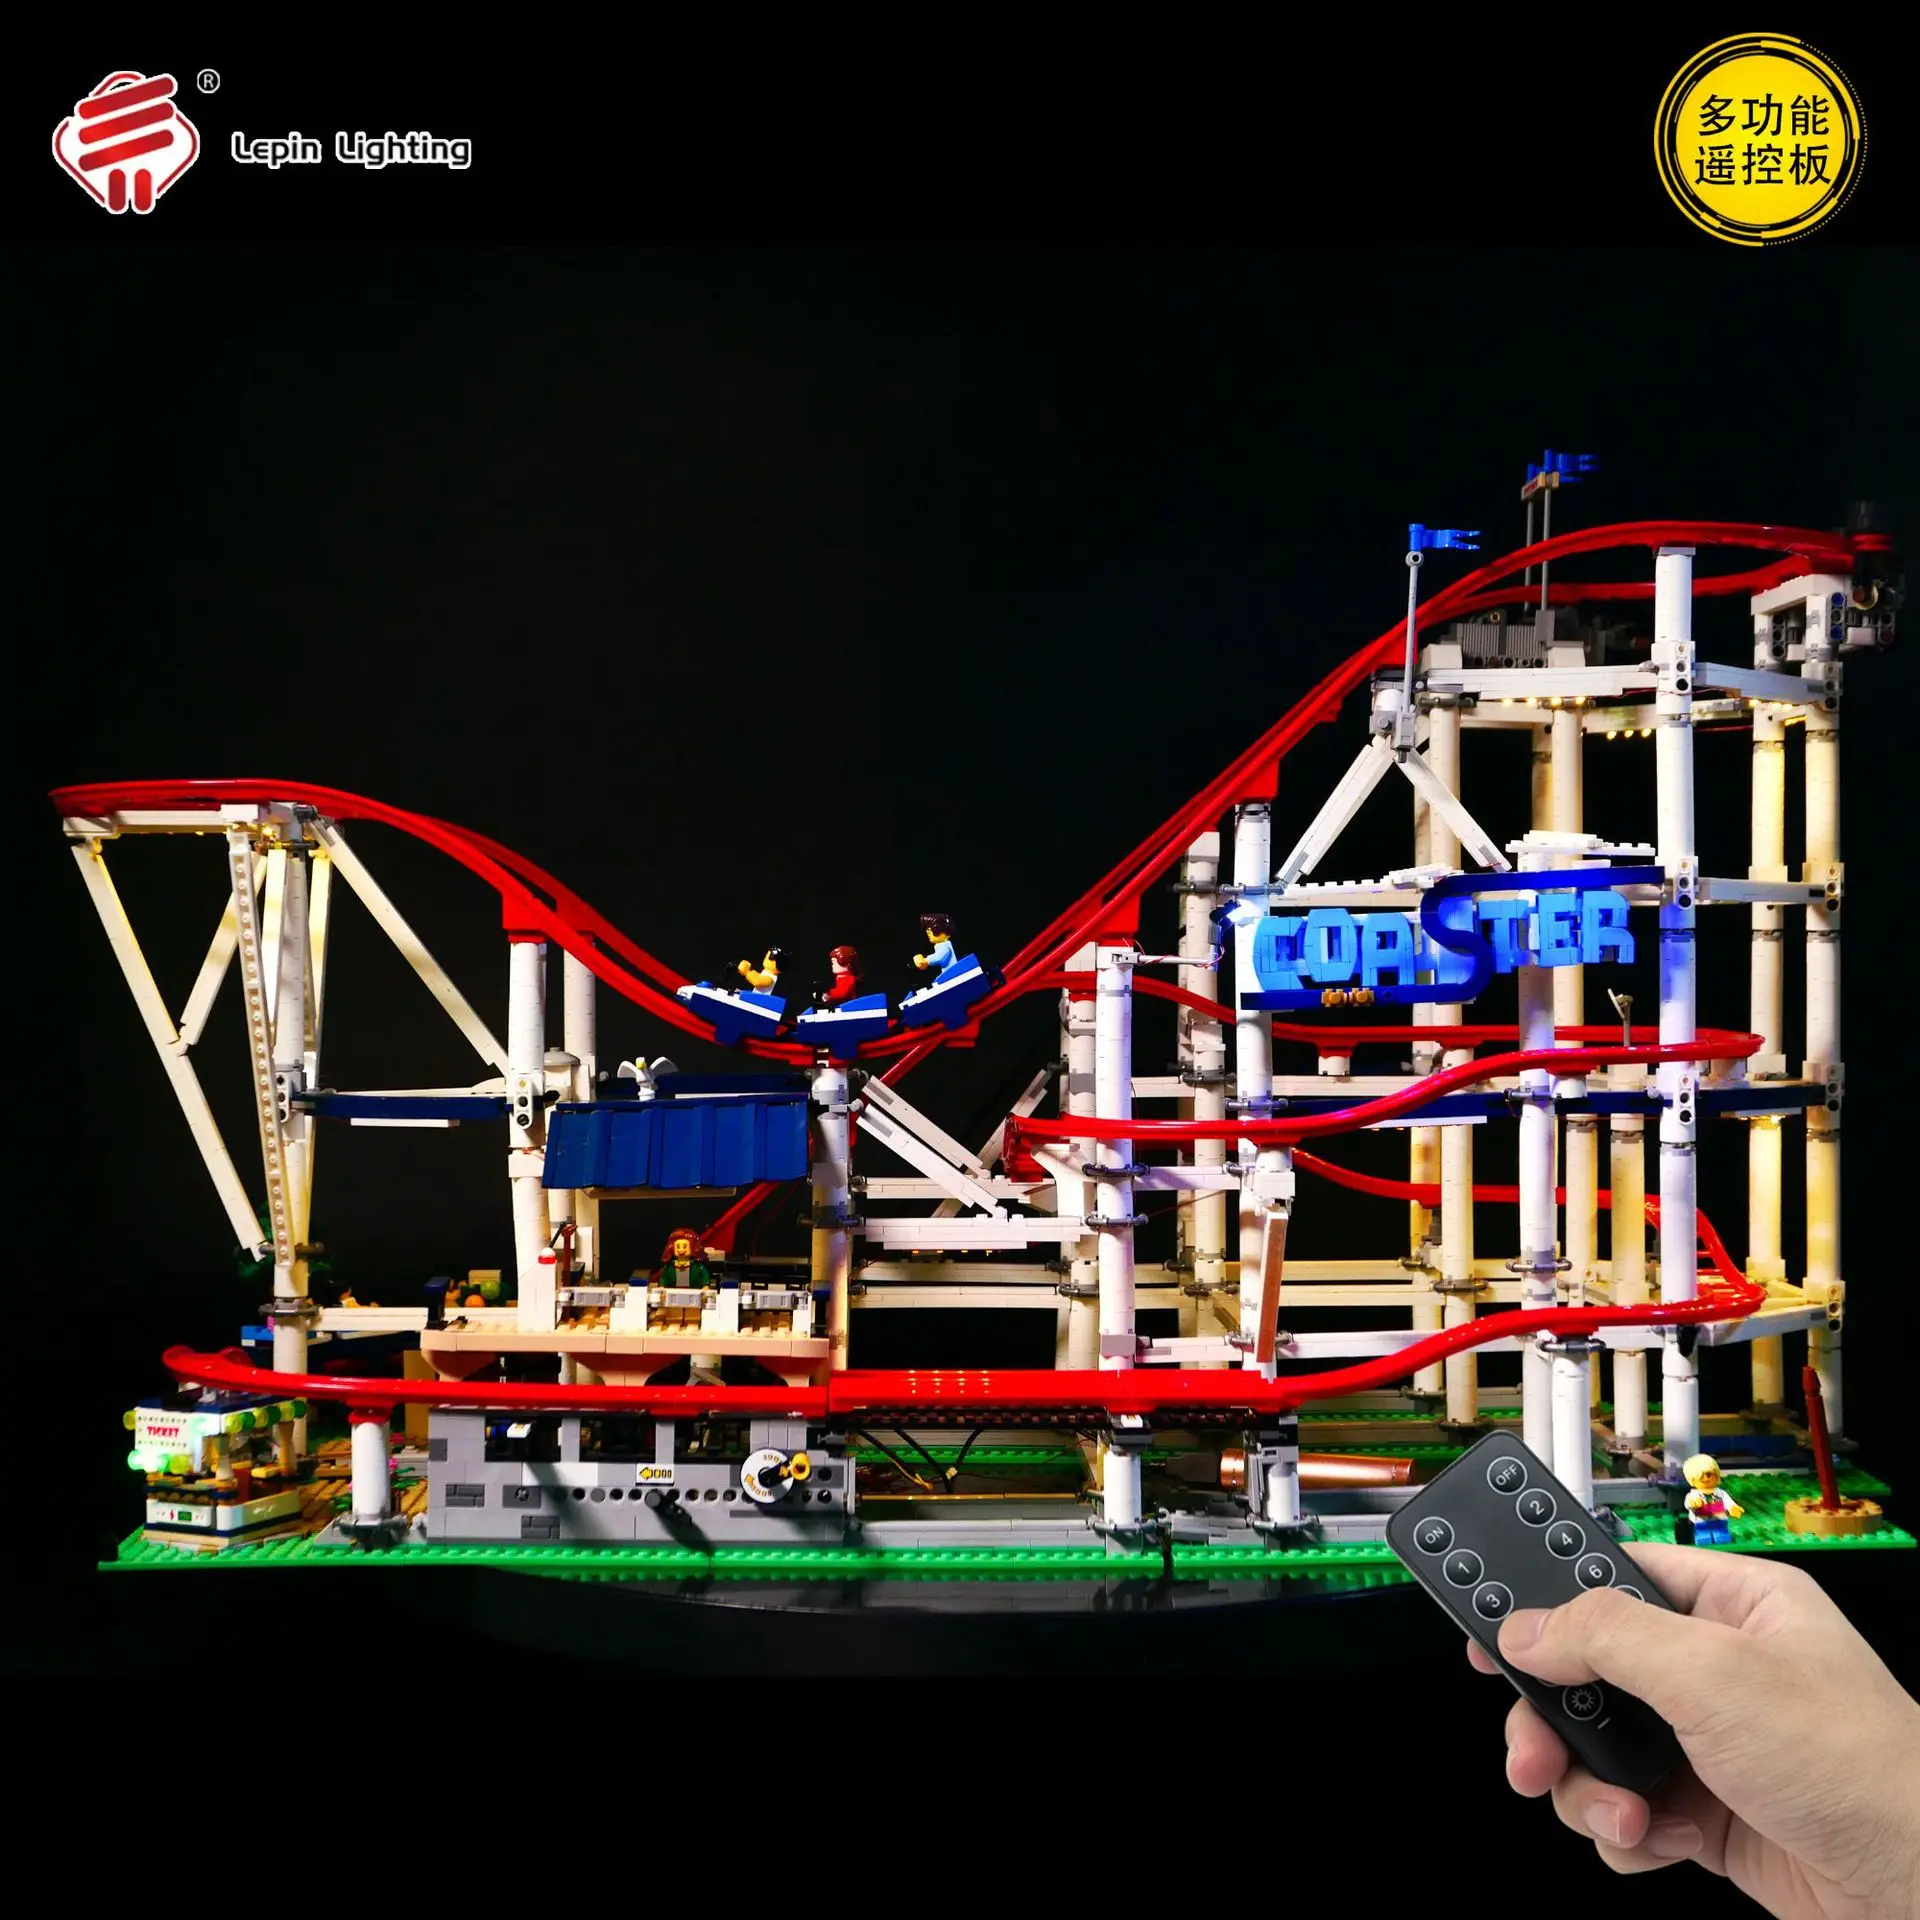 

In Stock LED Light Up Kit For 10261 Roller Coaster Toys Building Blocks Model (The Model Not Included)